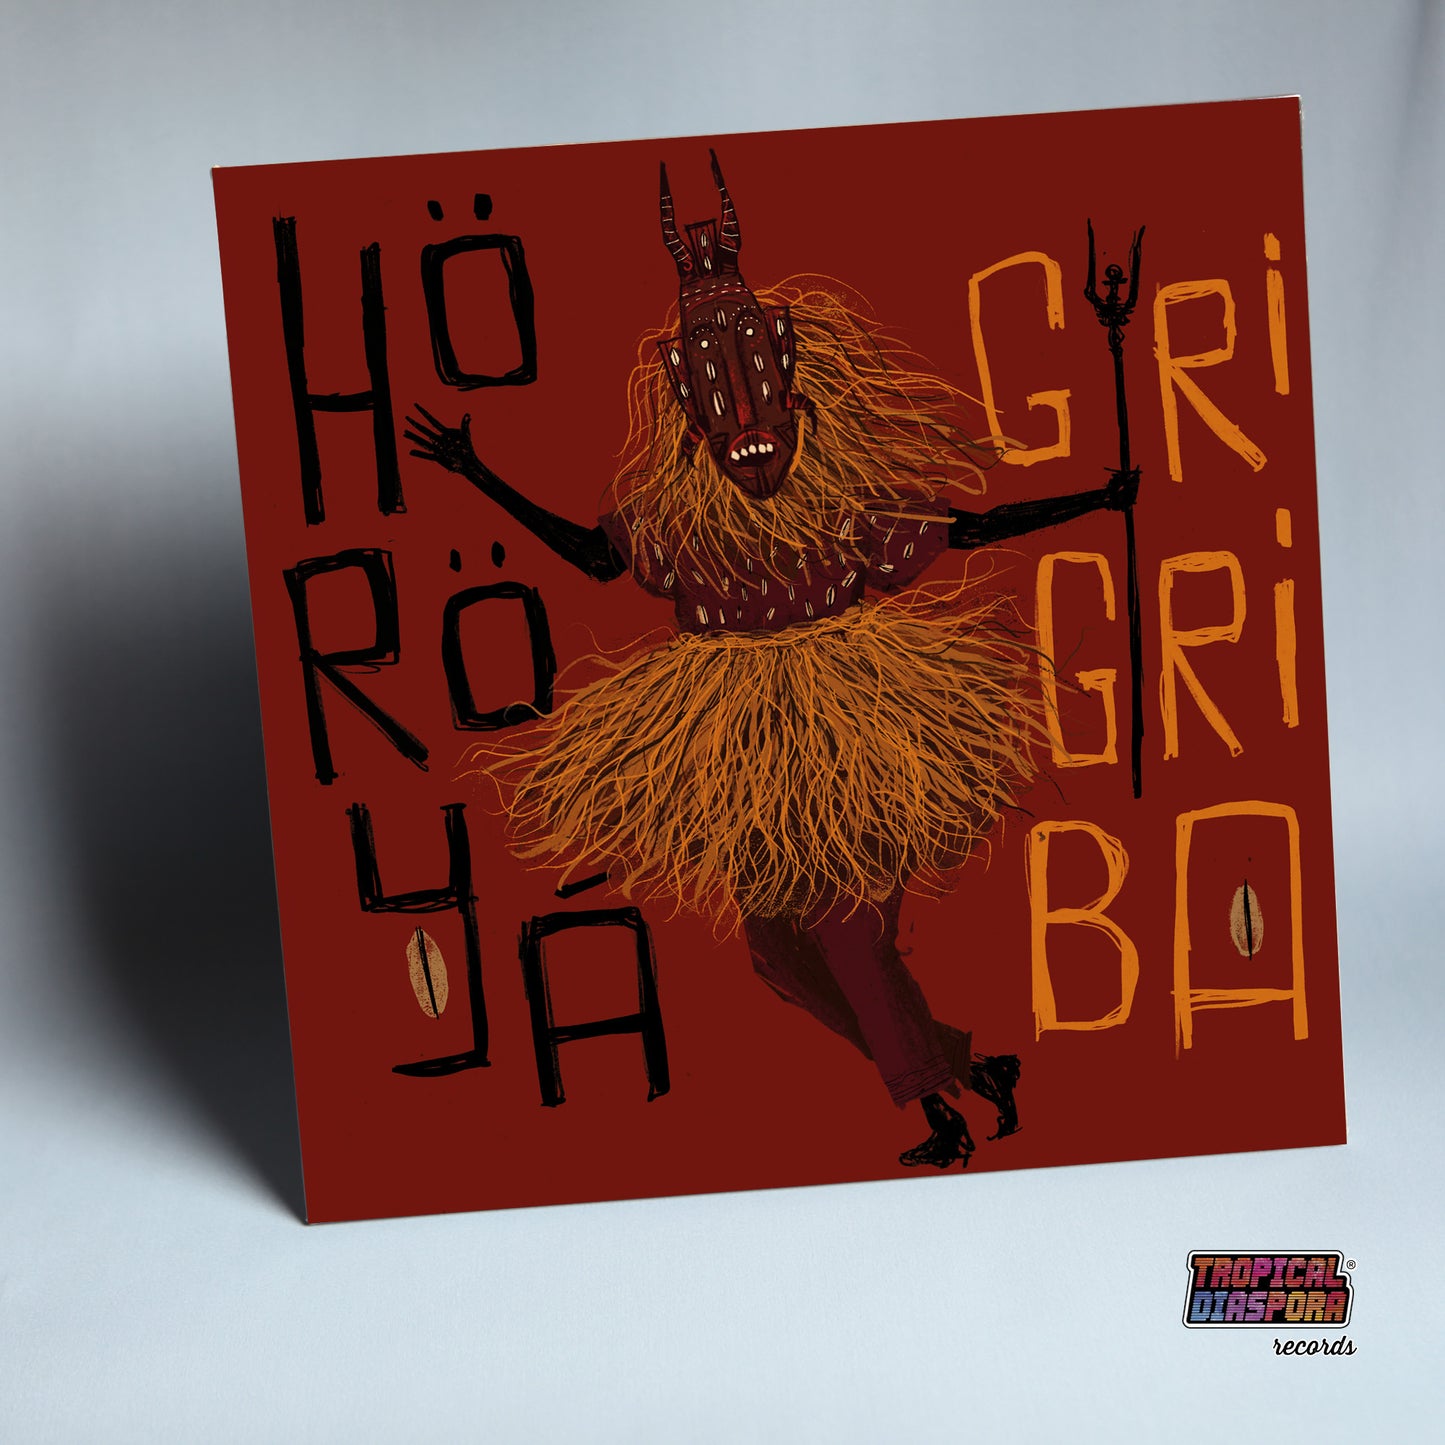 GRI GRI BÁ (The Great Spell, The Great Sorcerer) by HÖRÖYÁ